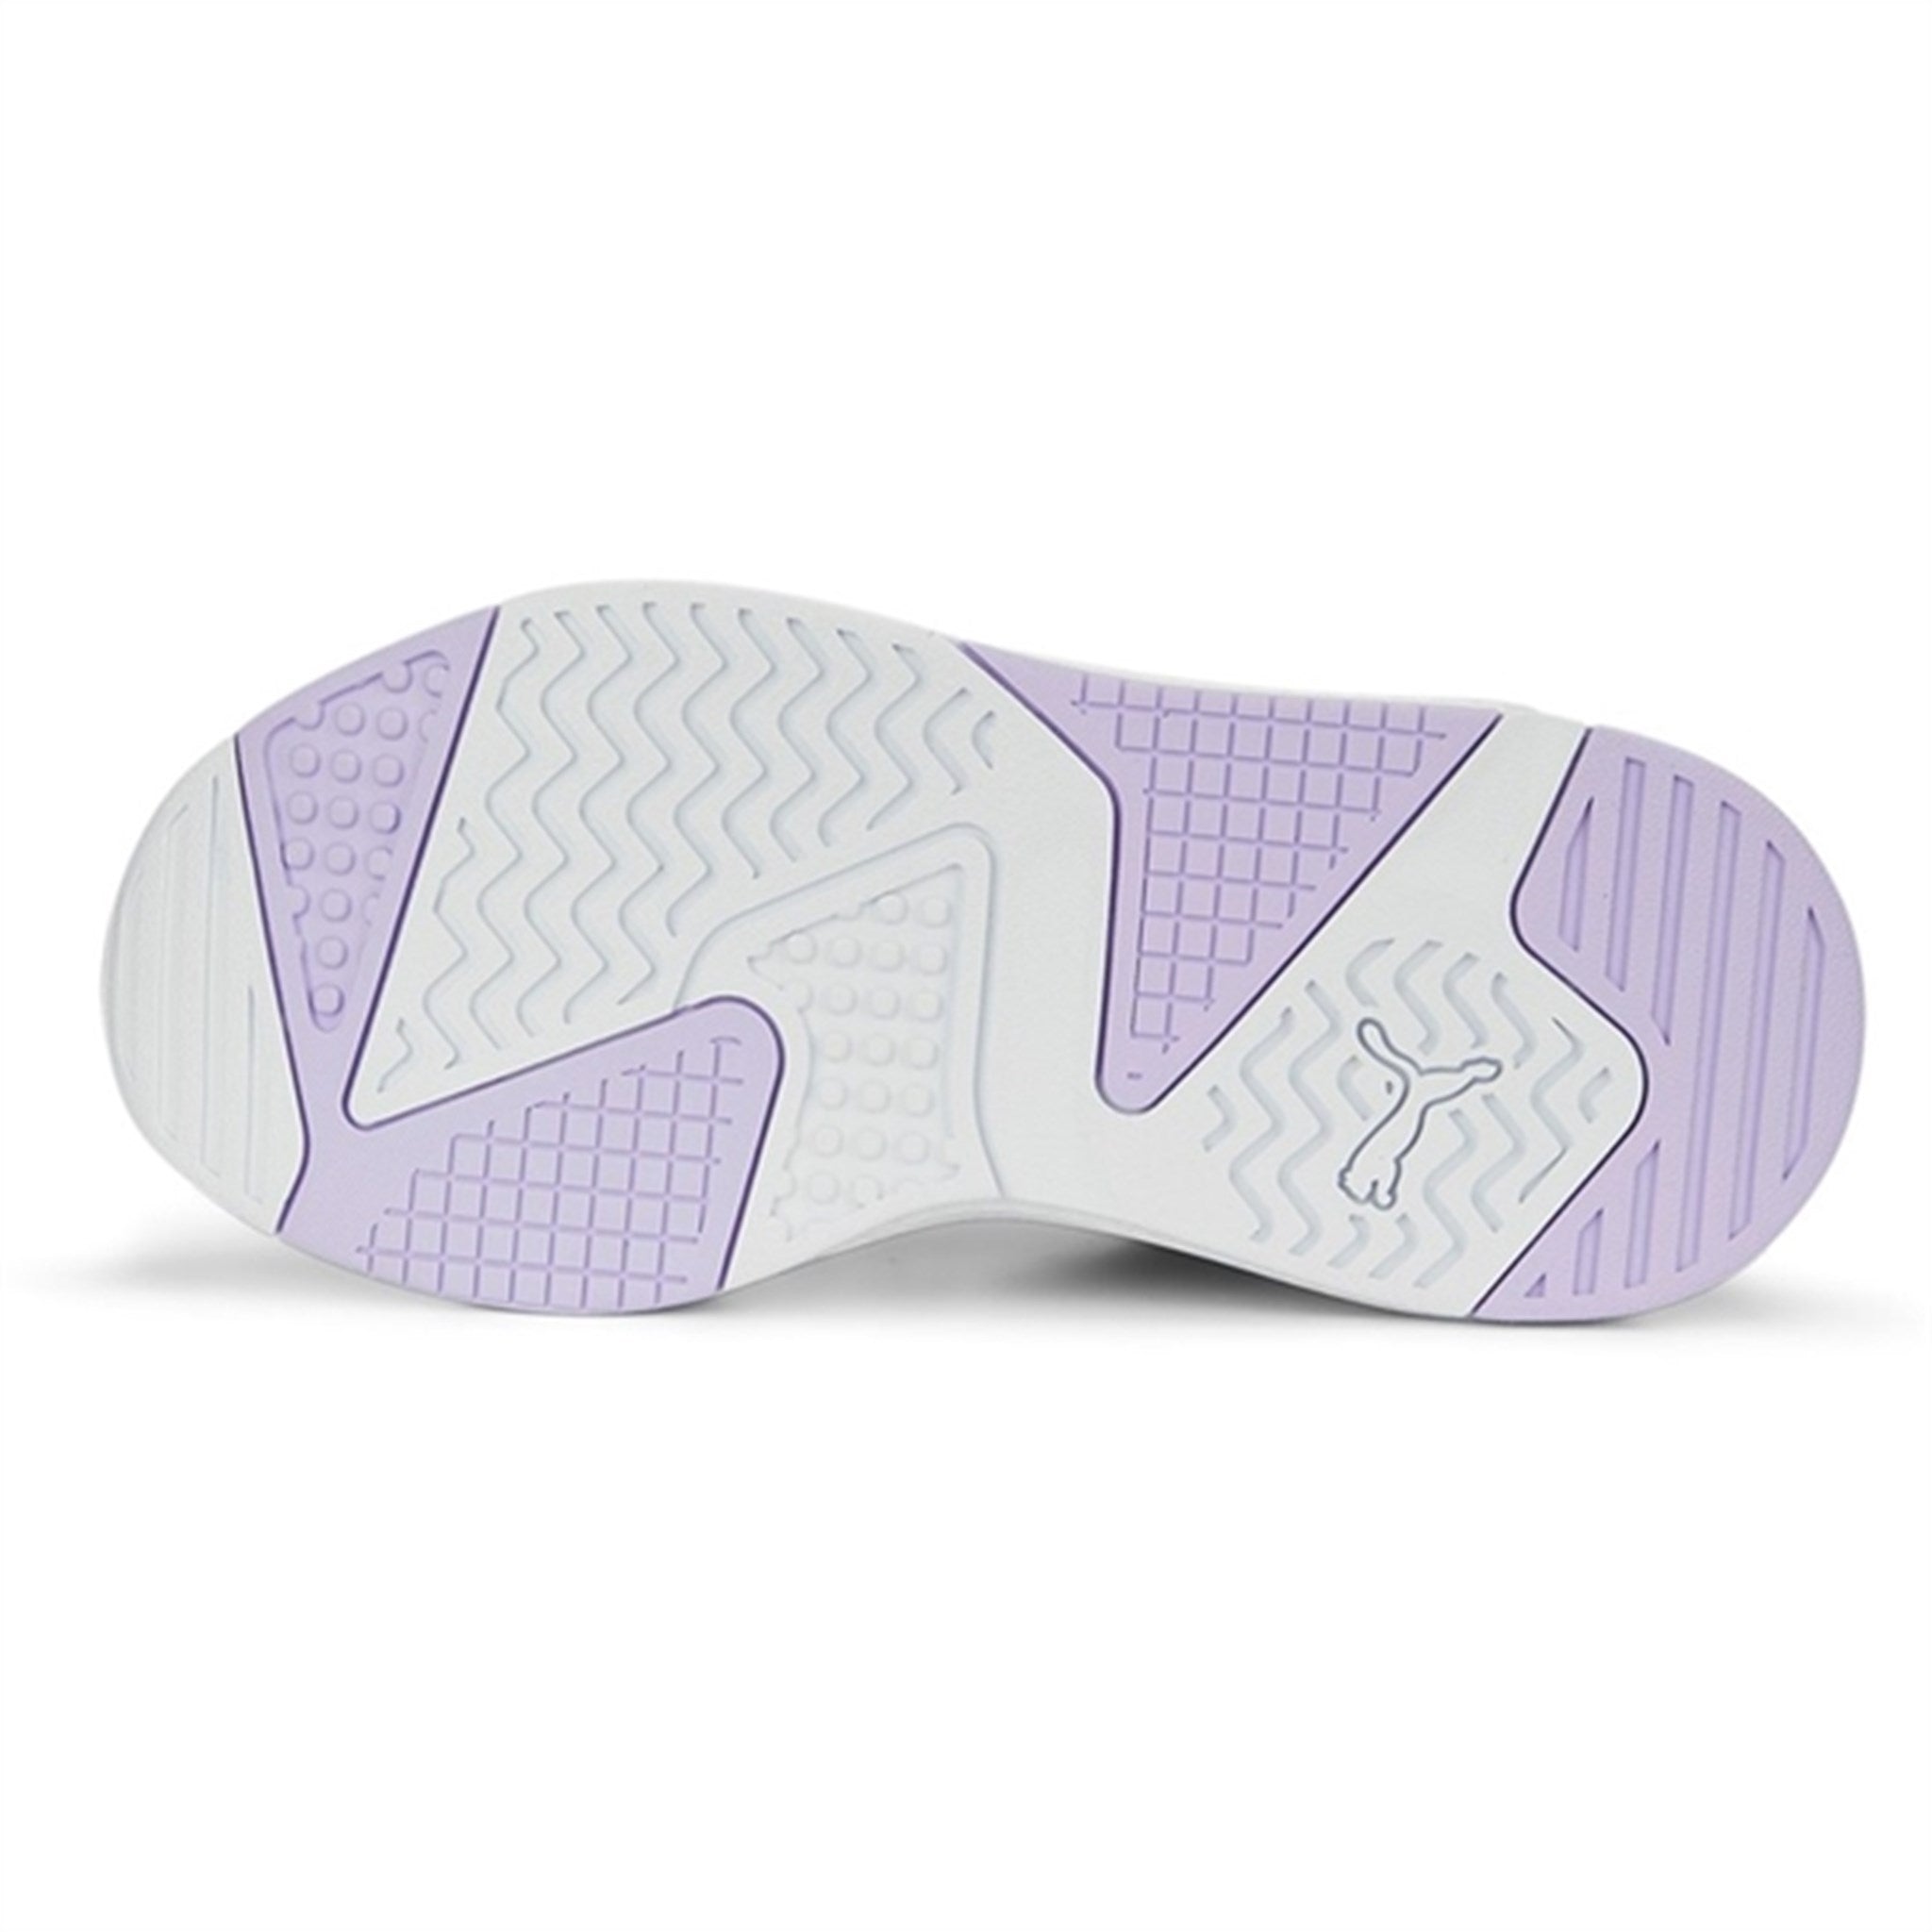 Puma X-Ray Speed Play Jr White-Vivid Violet-Lily Pad Sneakers 4